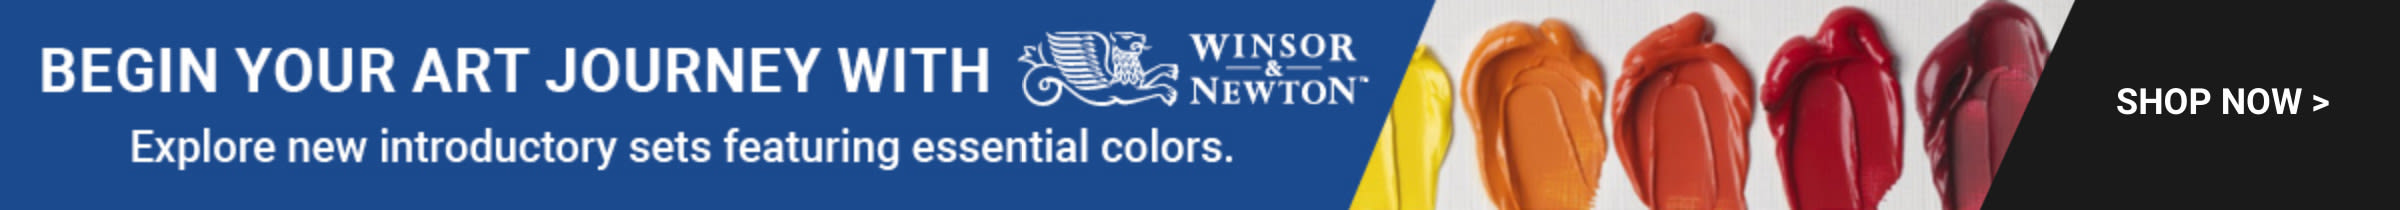 2pk Windsor Newton Galeria Acrylic Paint 2120-466 Alizarin Crimson 2oz NEW  OTHER